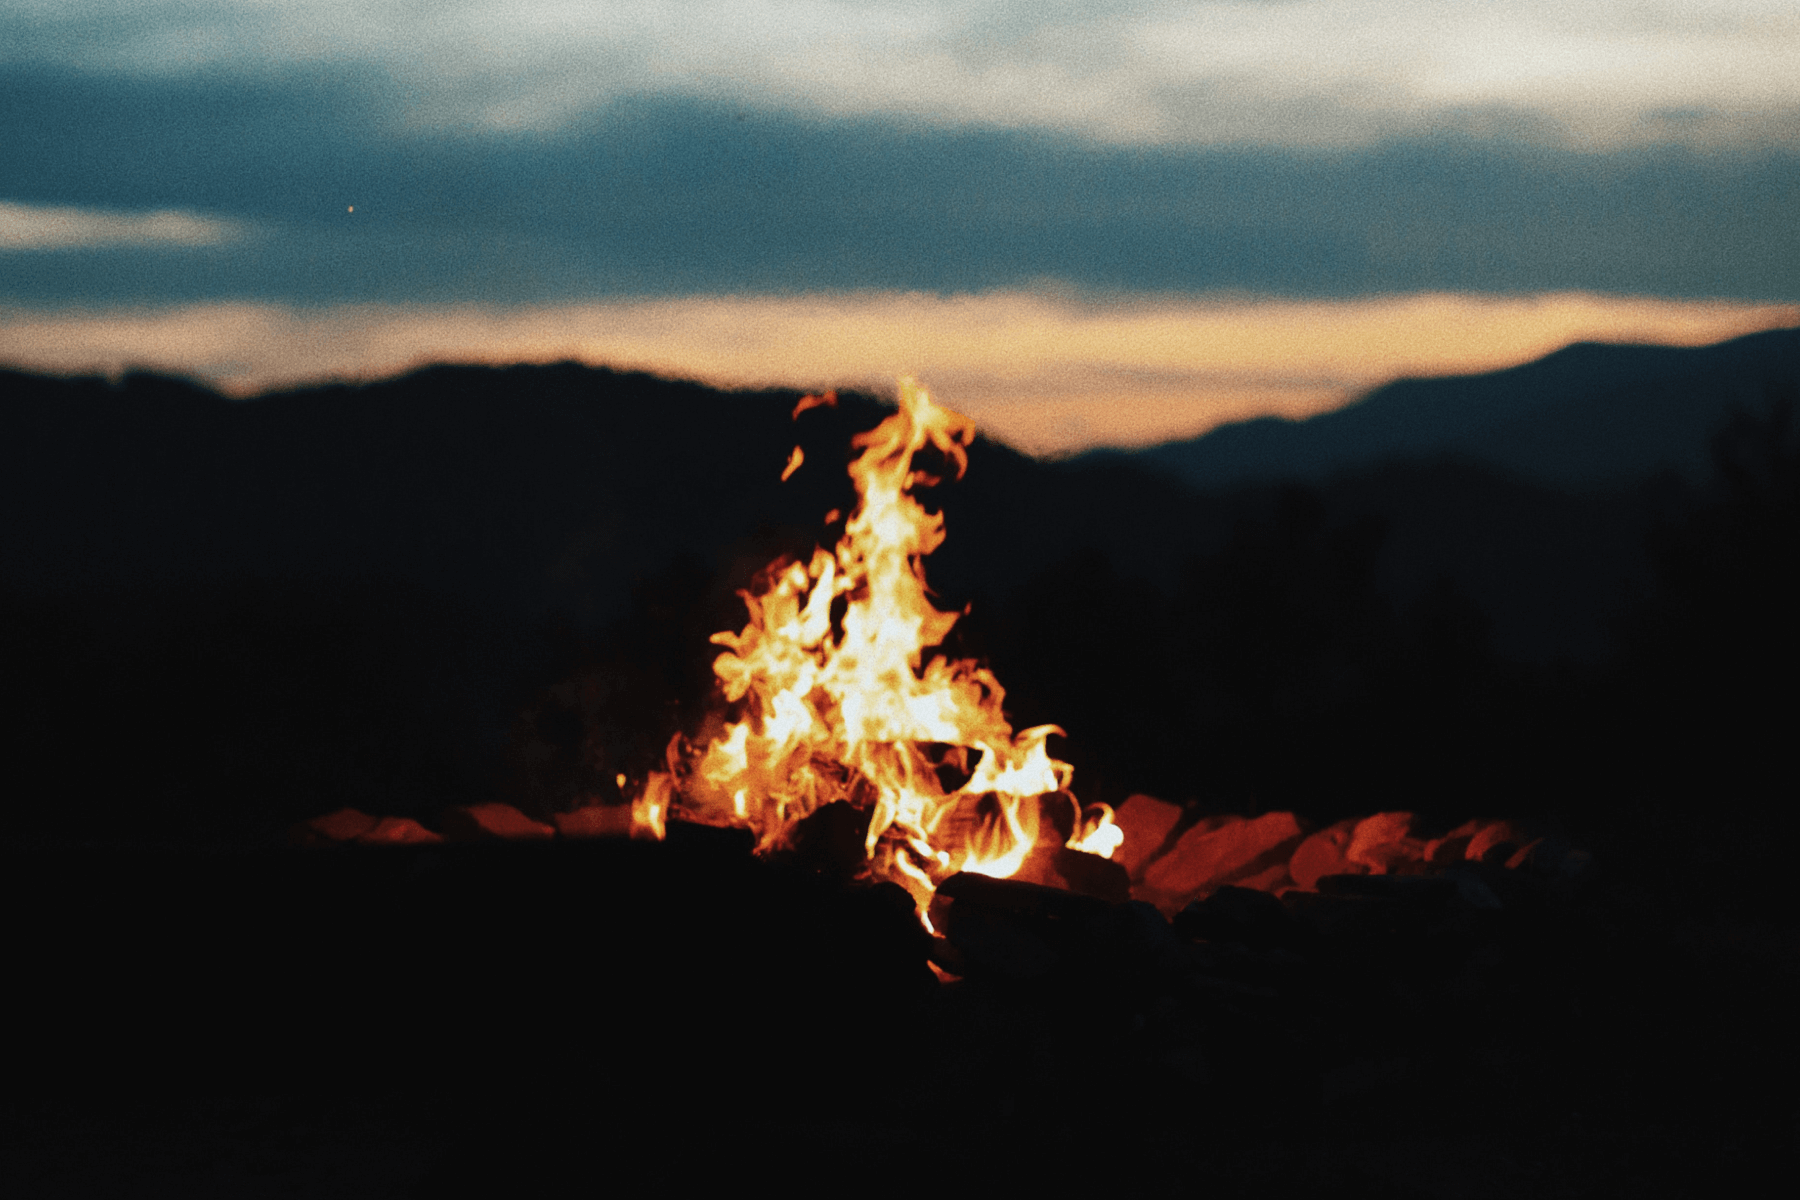 A dark photo of an outdoor bonfire.